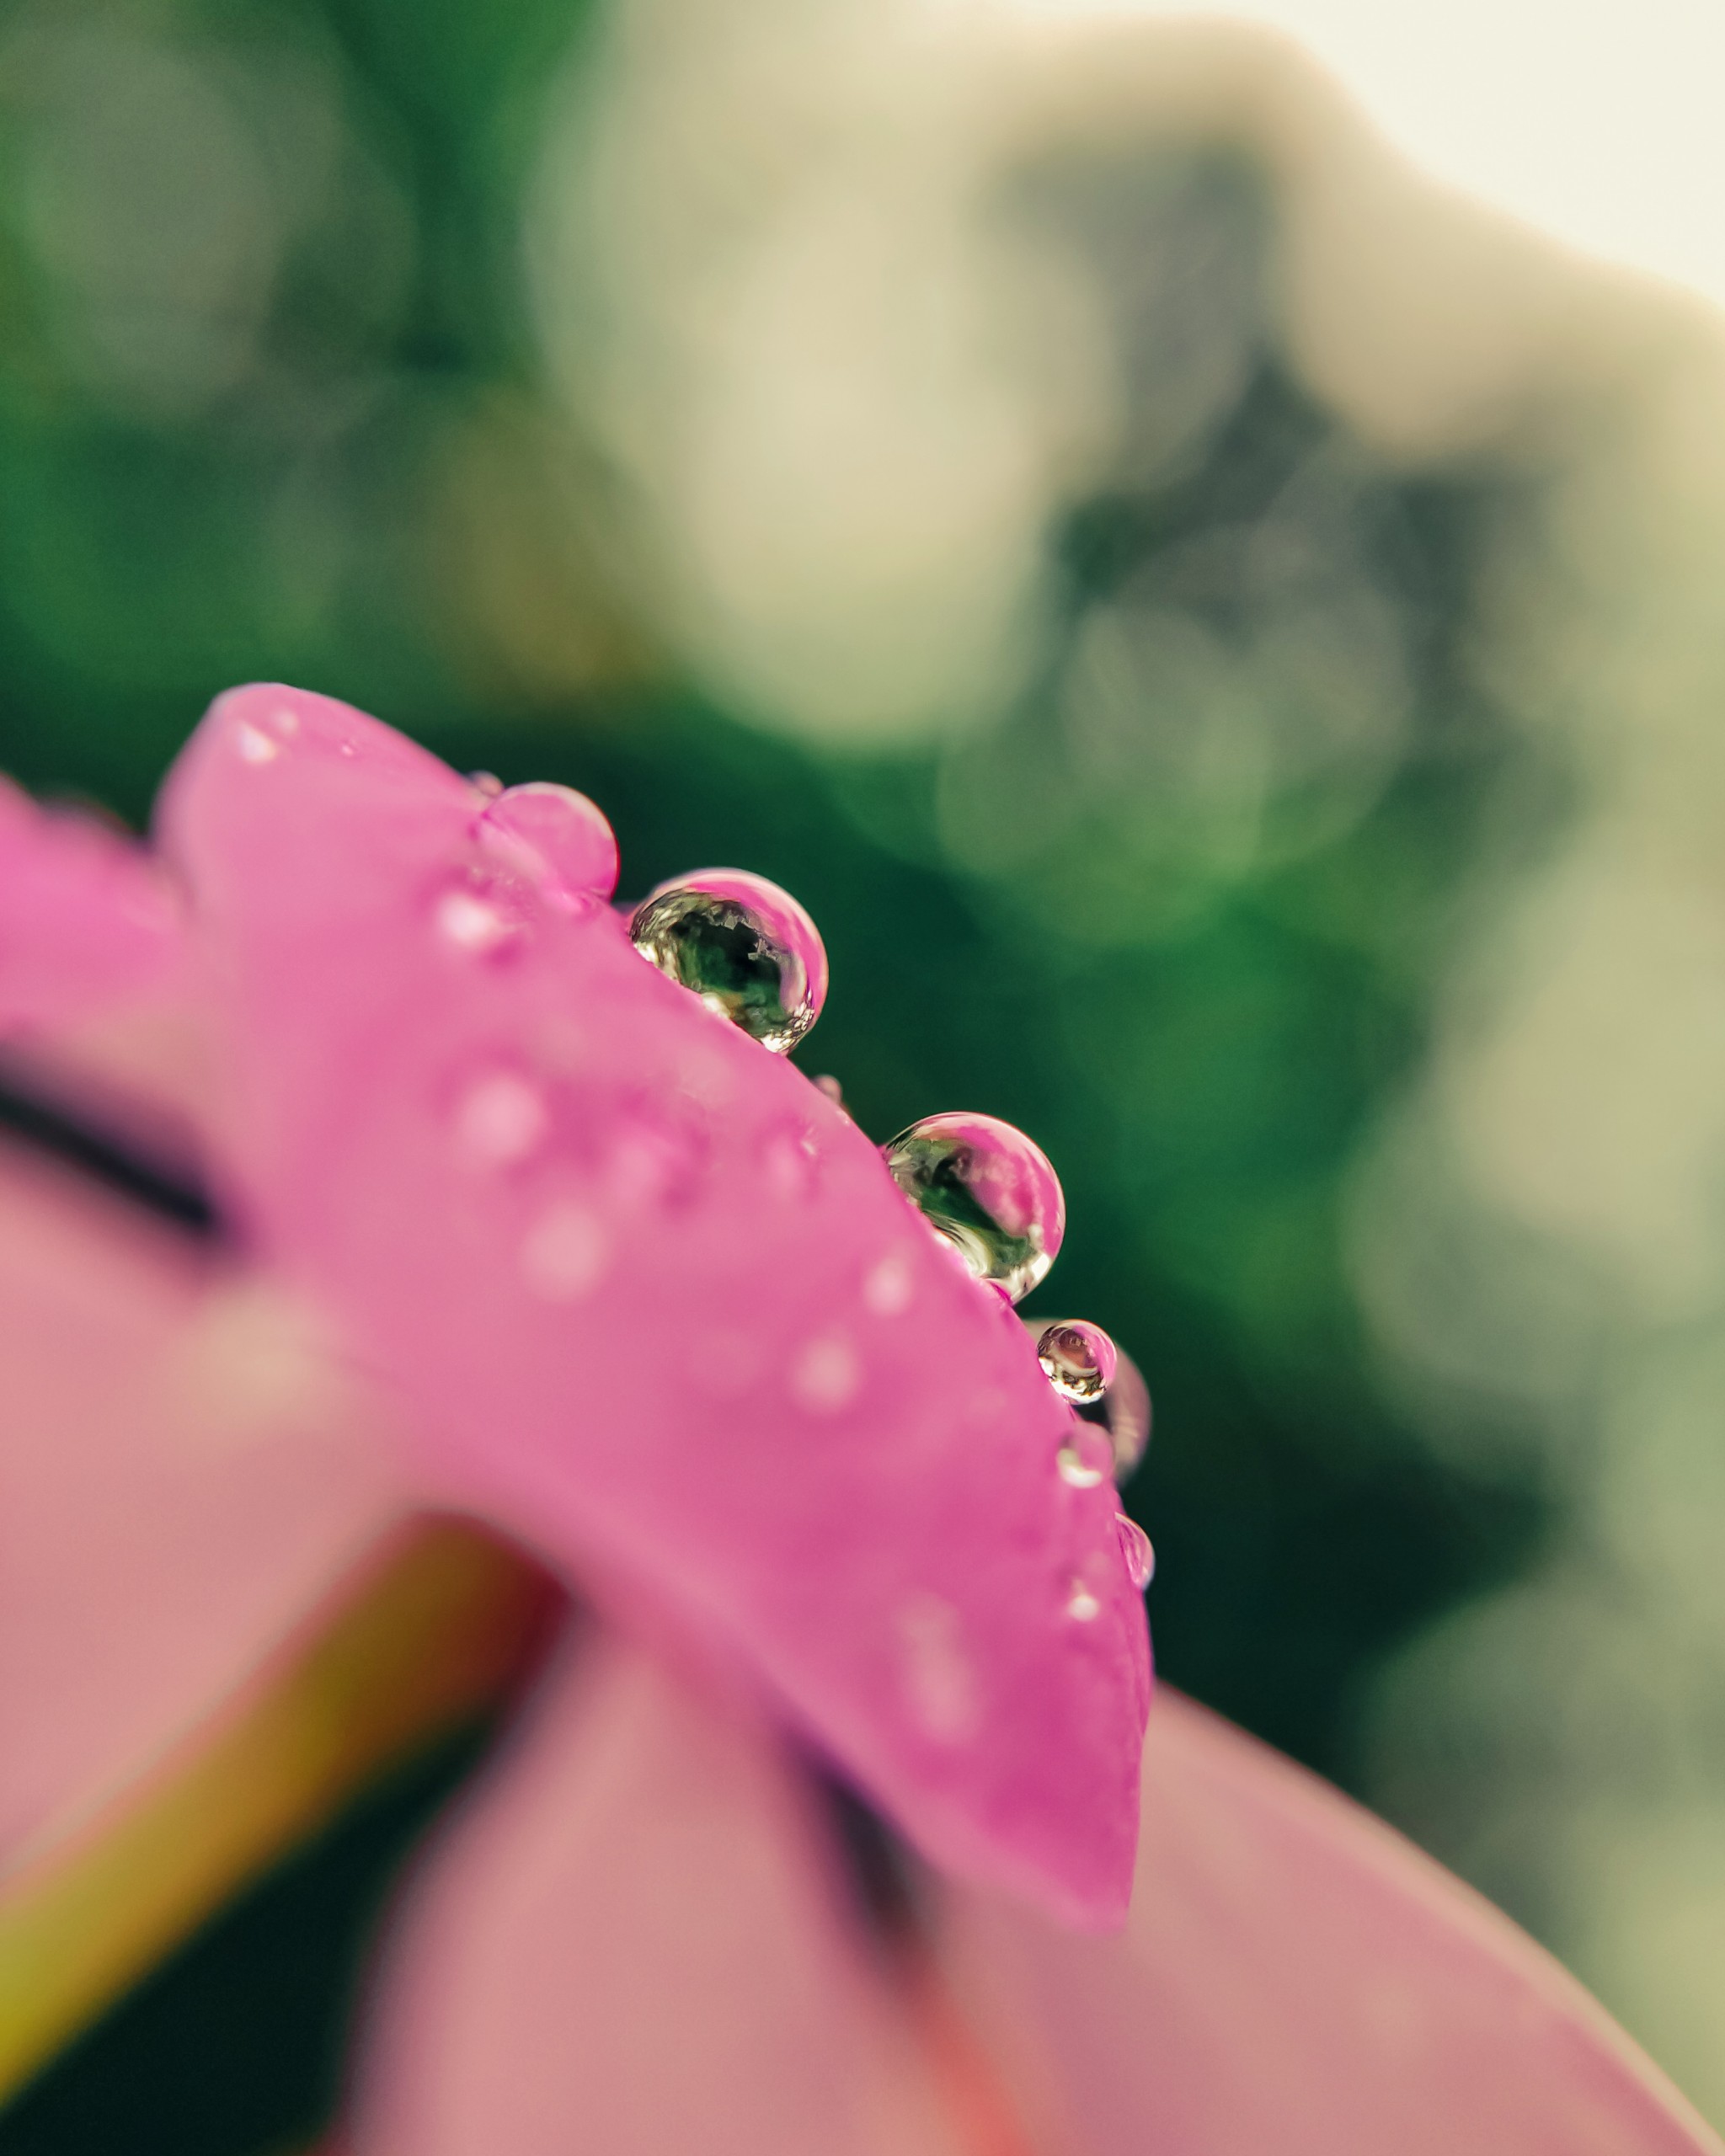 Rain droplets on petal of flower